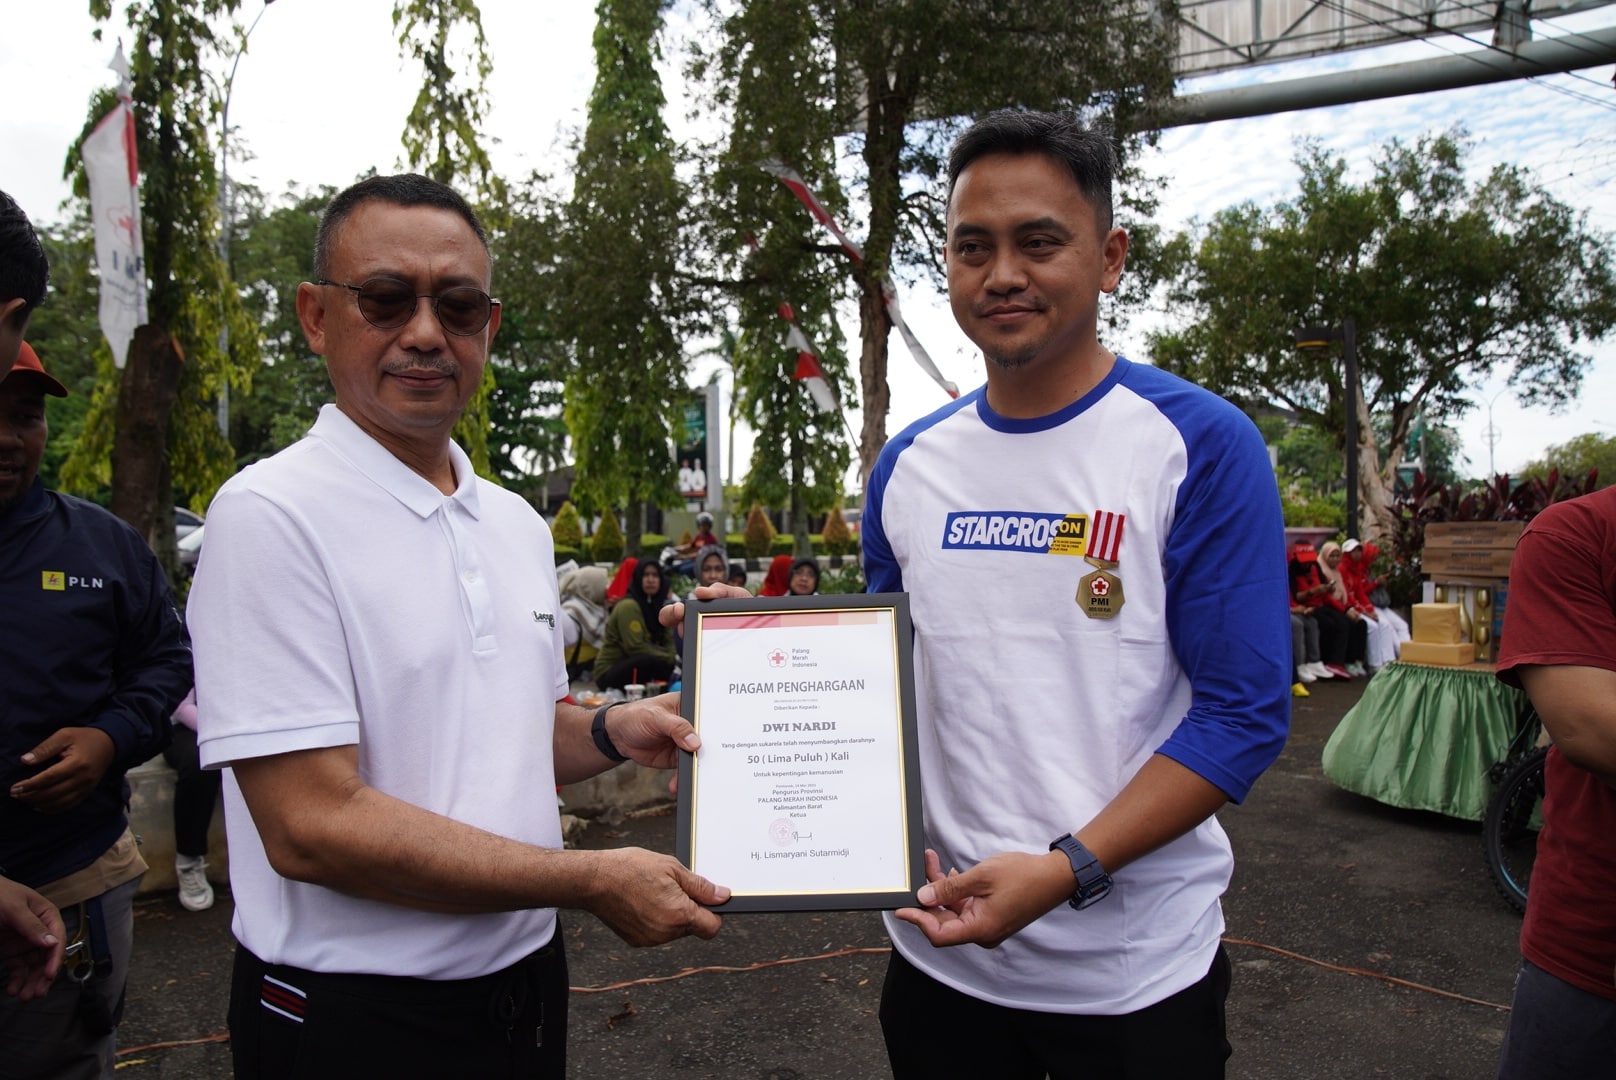 Wali Kota Pontianak, Edi Rusdi Kamtono menyerahkan piagam penghargaan kepada Dwi Nardi yang telah sukarela donor darah sebanyak 50 kali. (Foto: Prokopim For KalbarOnline.com)